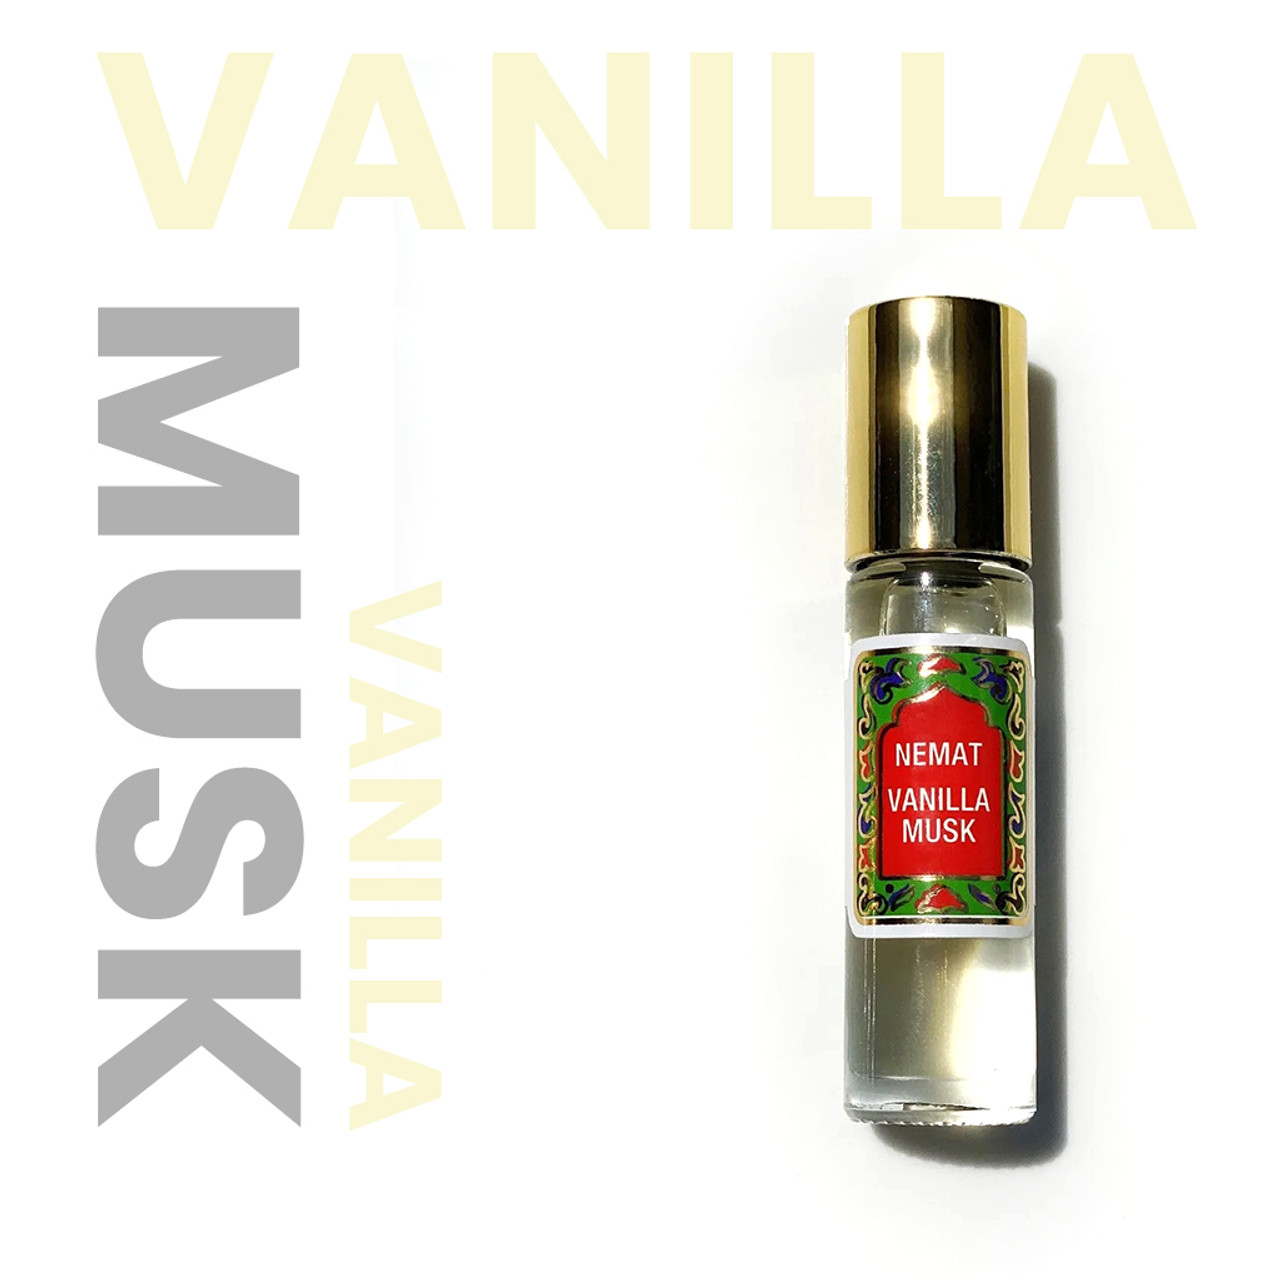 1 oz. Sensual Vanilla Musk Fragrance Oil